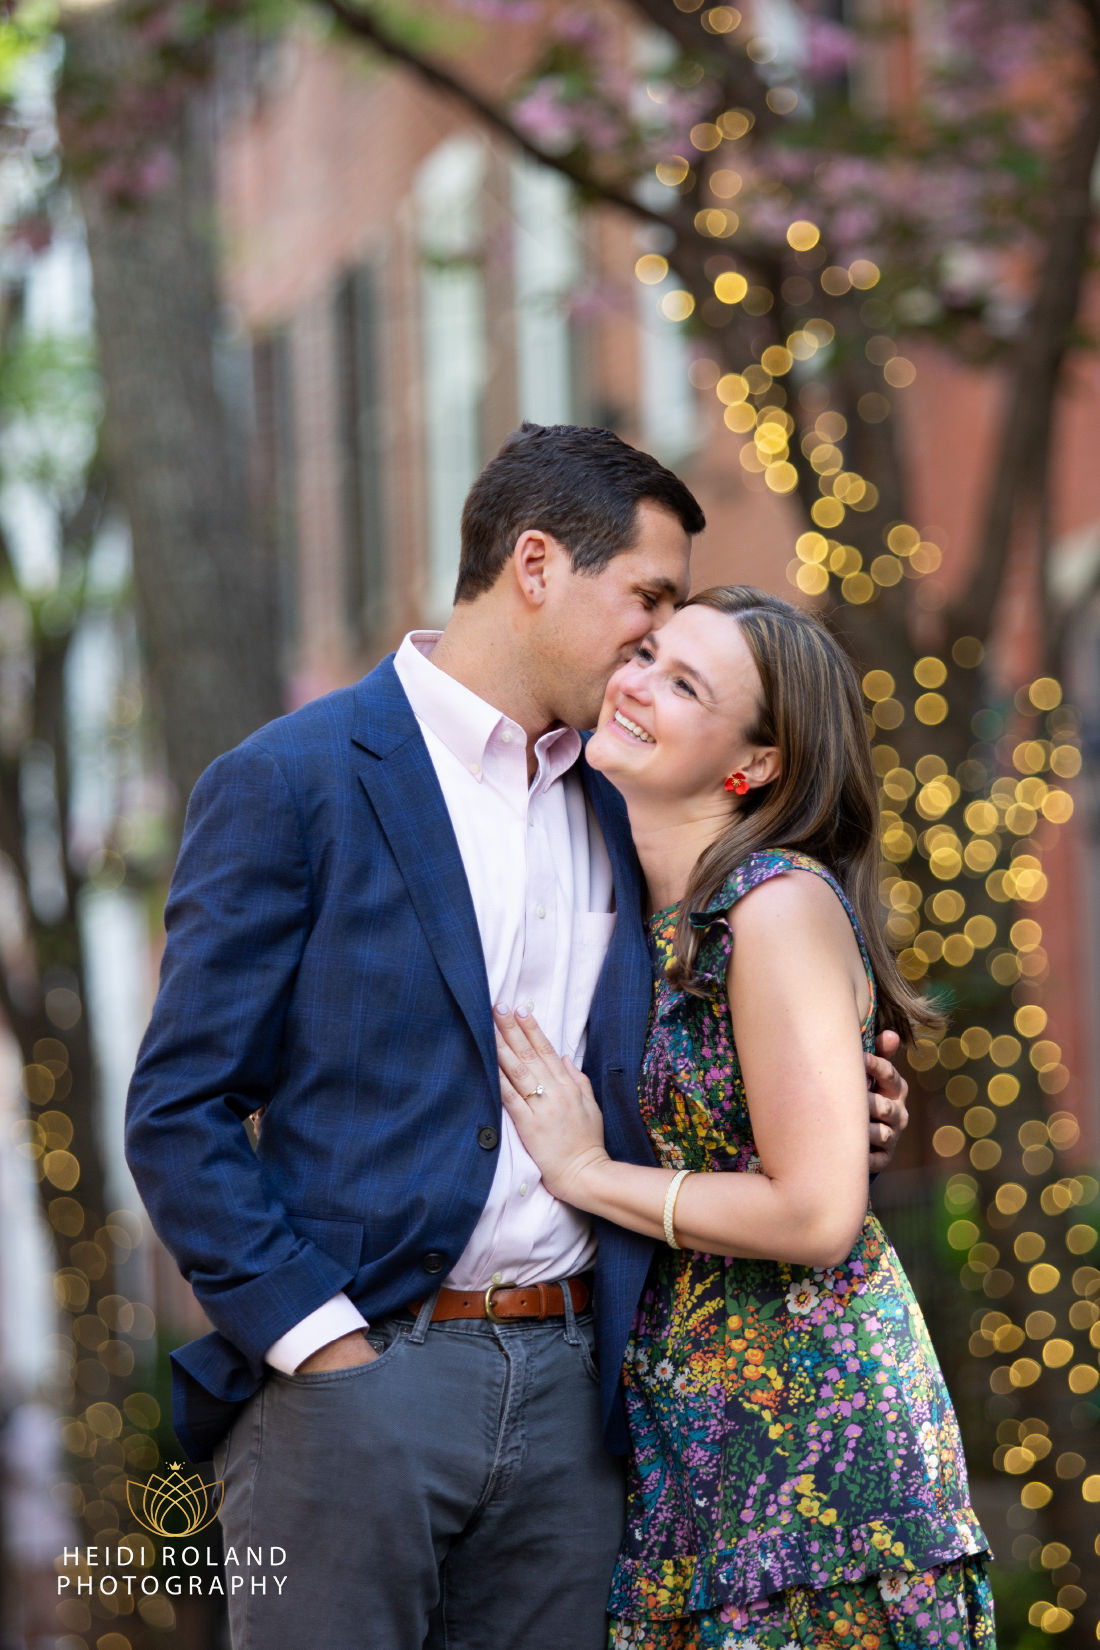 Man whispering in smiling woman's ear after philadelphia proposal 